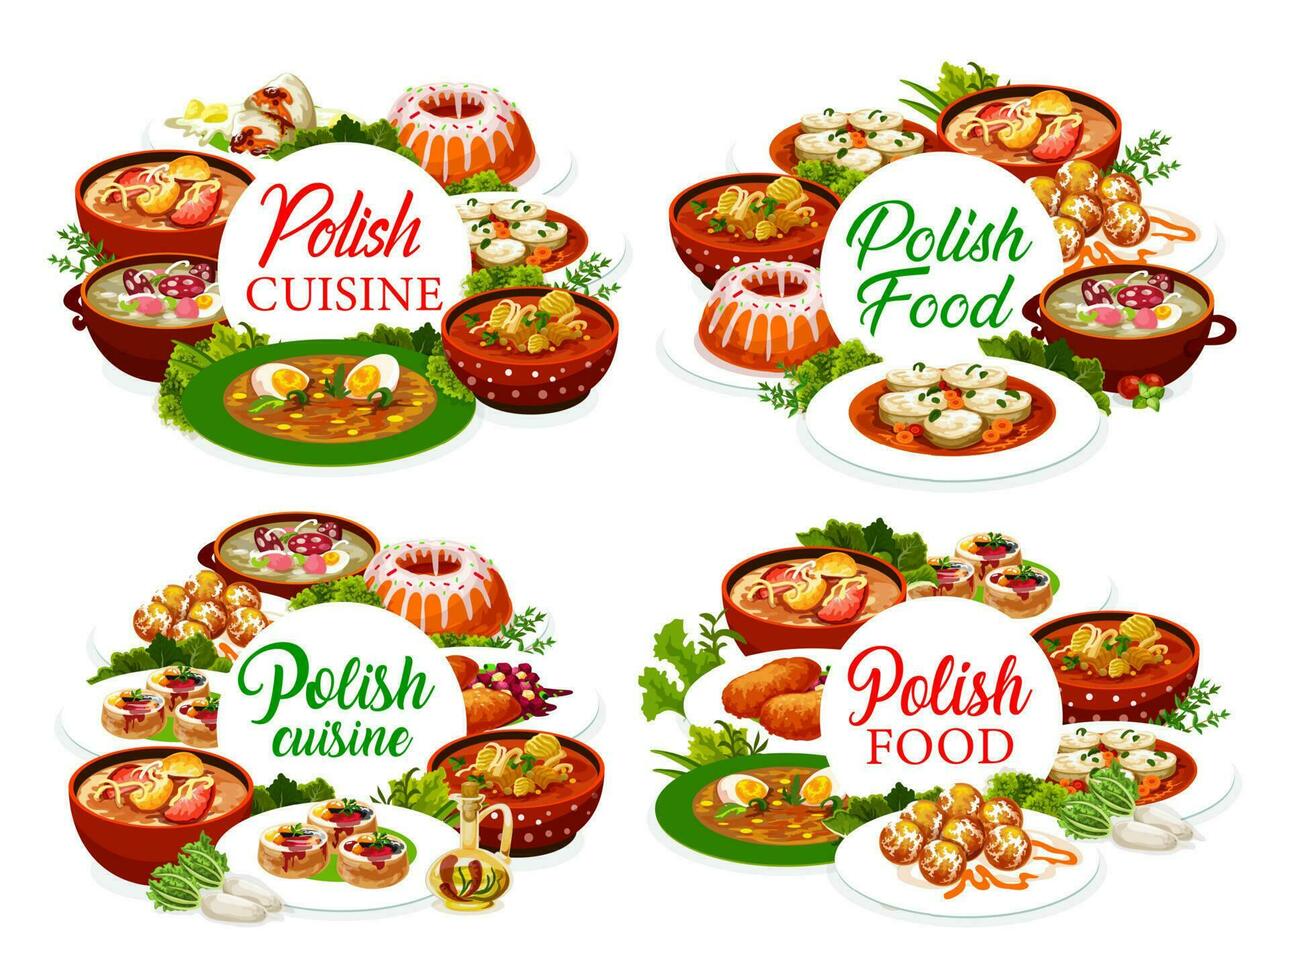 Polish cuisine menu cover design, Poland dishes vector